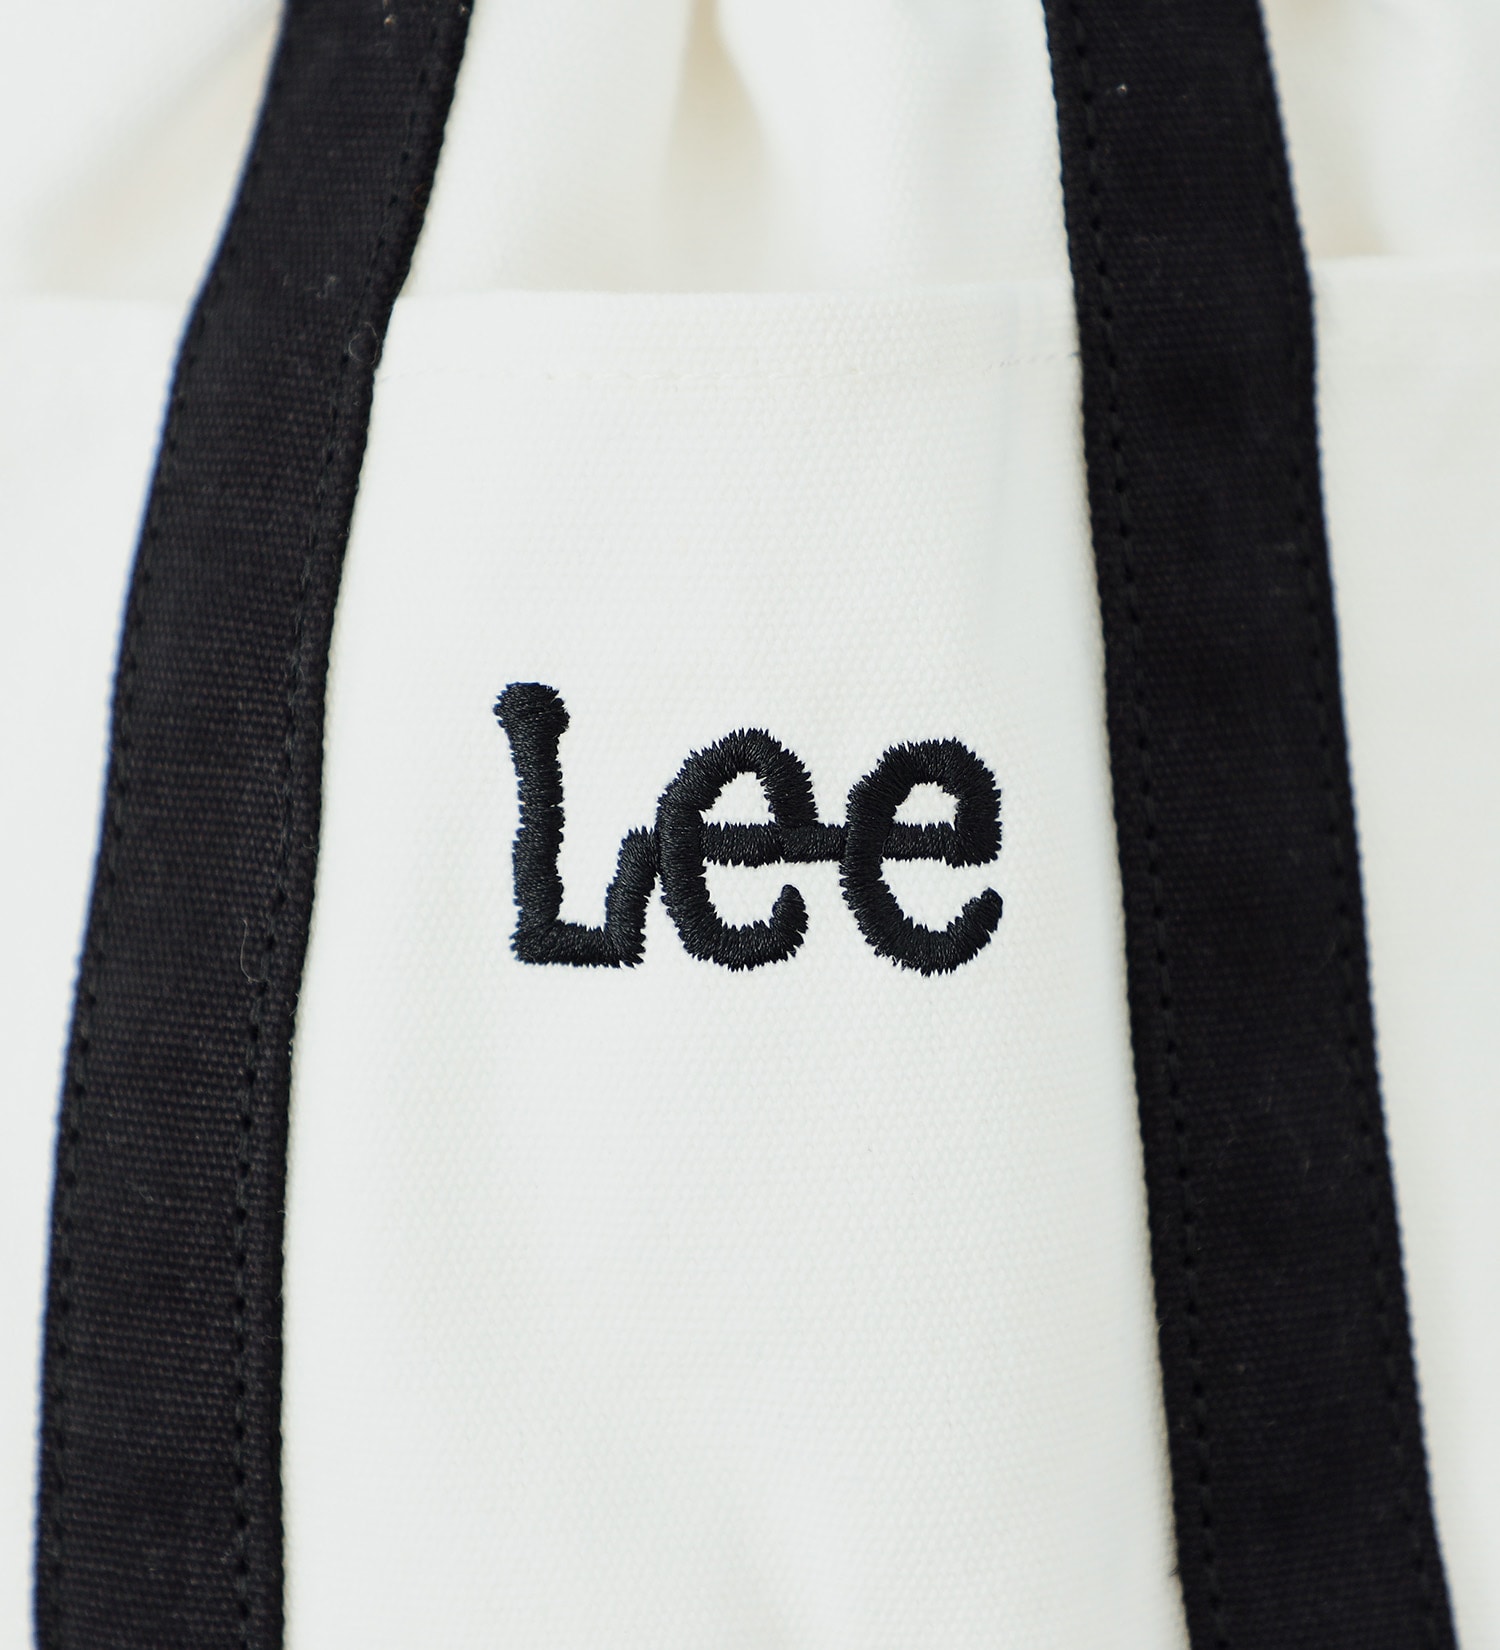 Lee(リー)の【Lee GOLF】巾着カートバッグ|バッグ/その他バッグ/メンズ|ホワイト